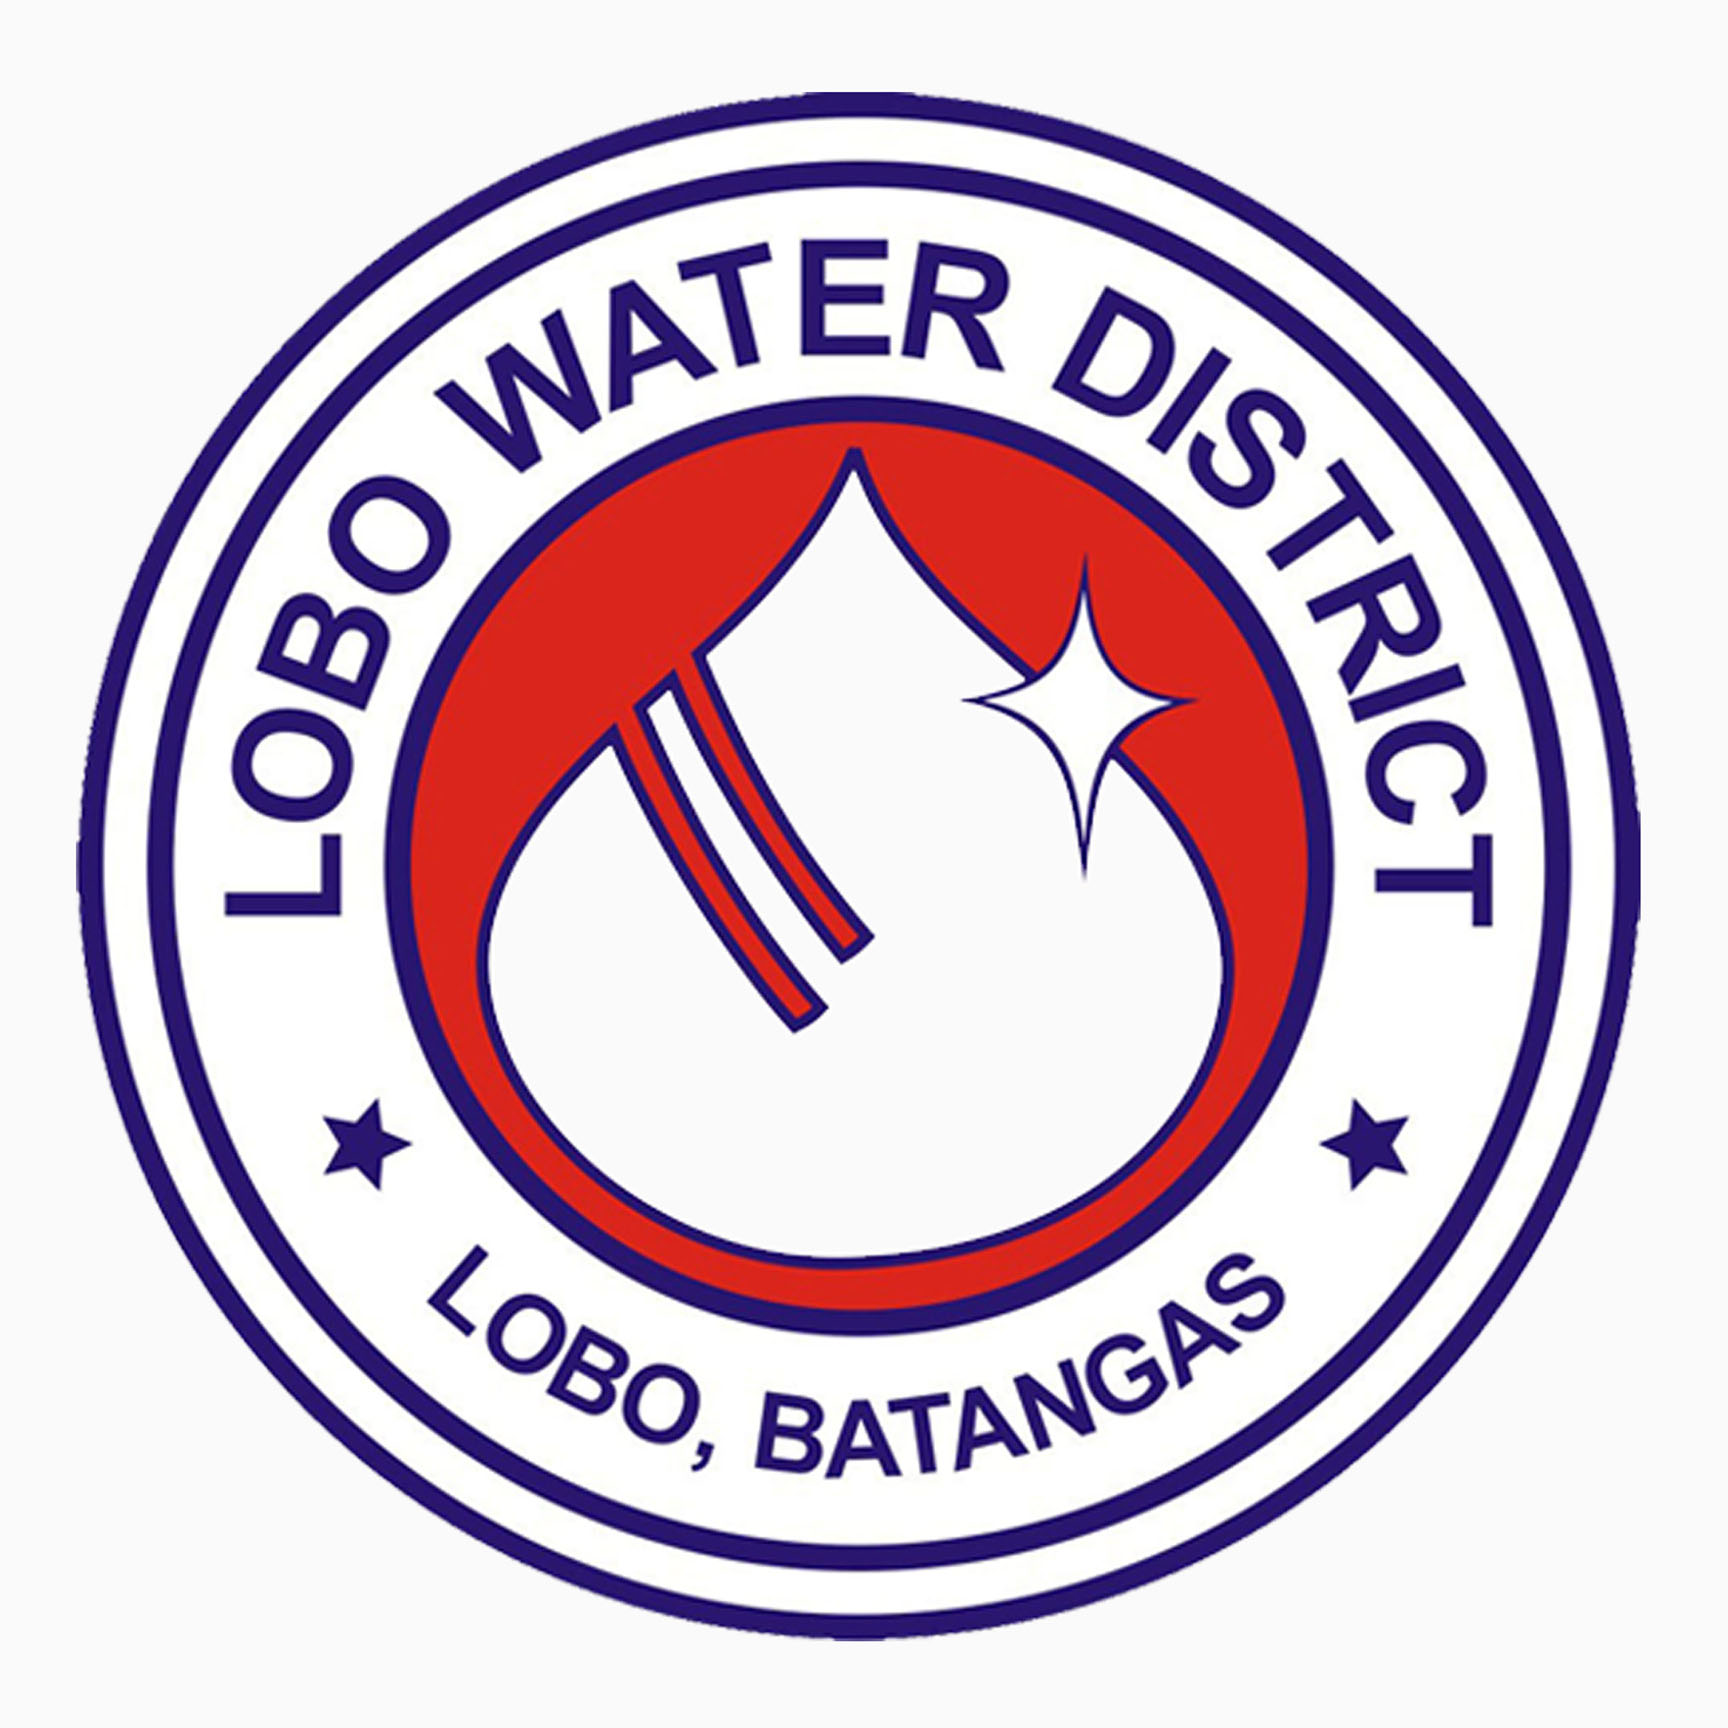 LOBO WATER DISTRICT